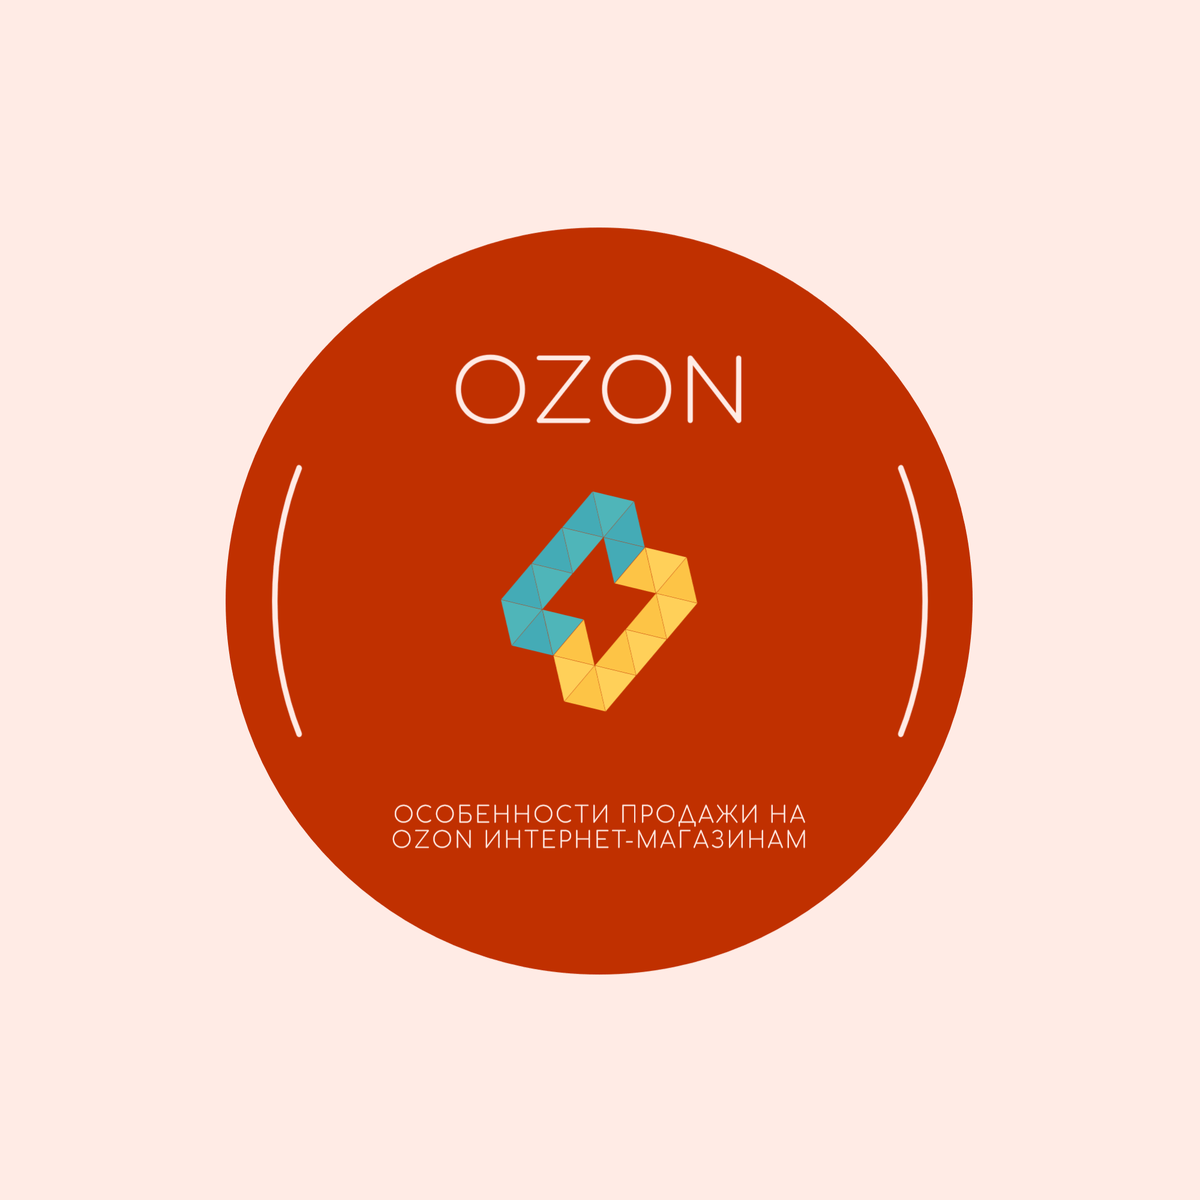 Открыть счет озон ип. Озон интернет-магазин. Минусы интернет магазина Озон. Озон интернет-магазин номера для дверей. Озон интернет-магазин Астрахань график.